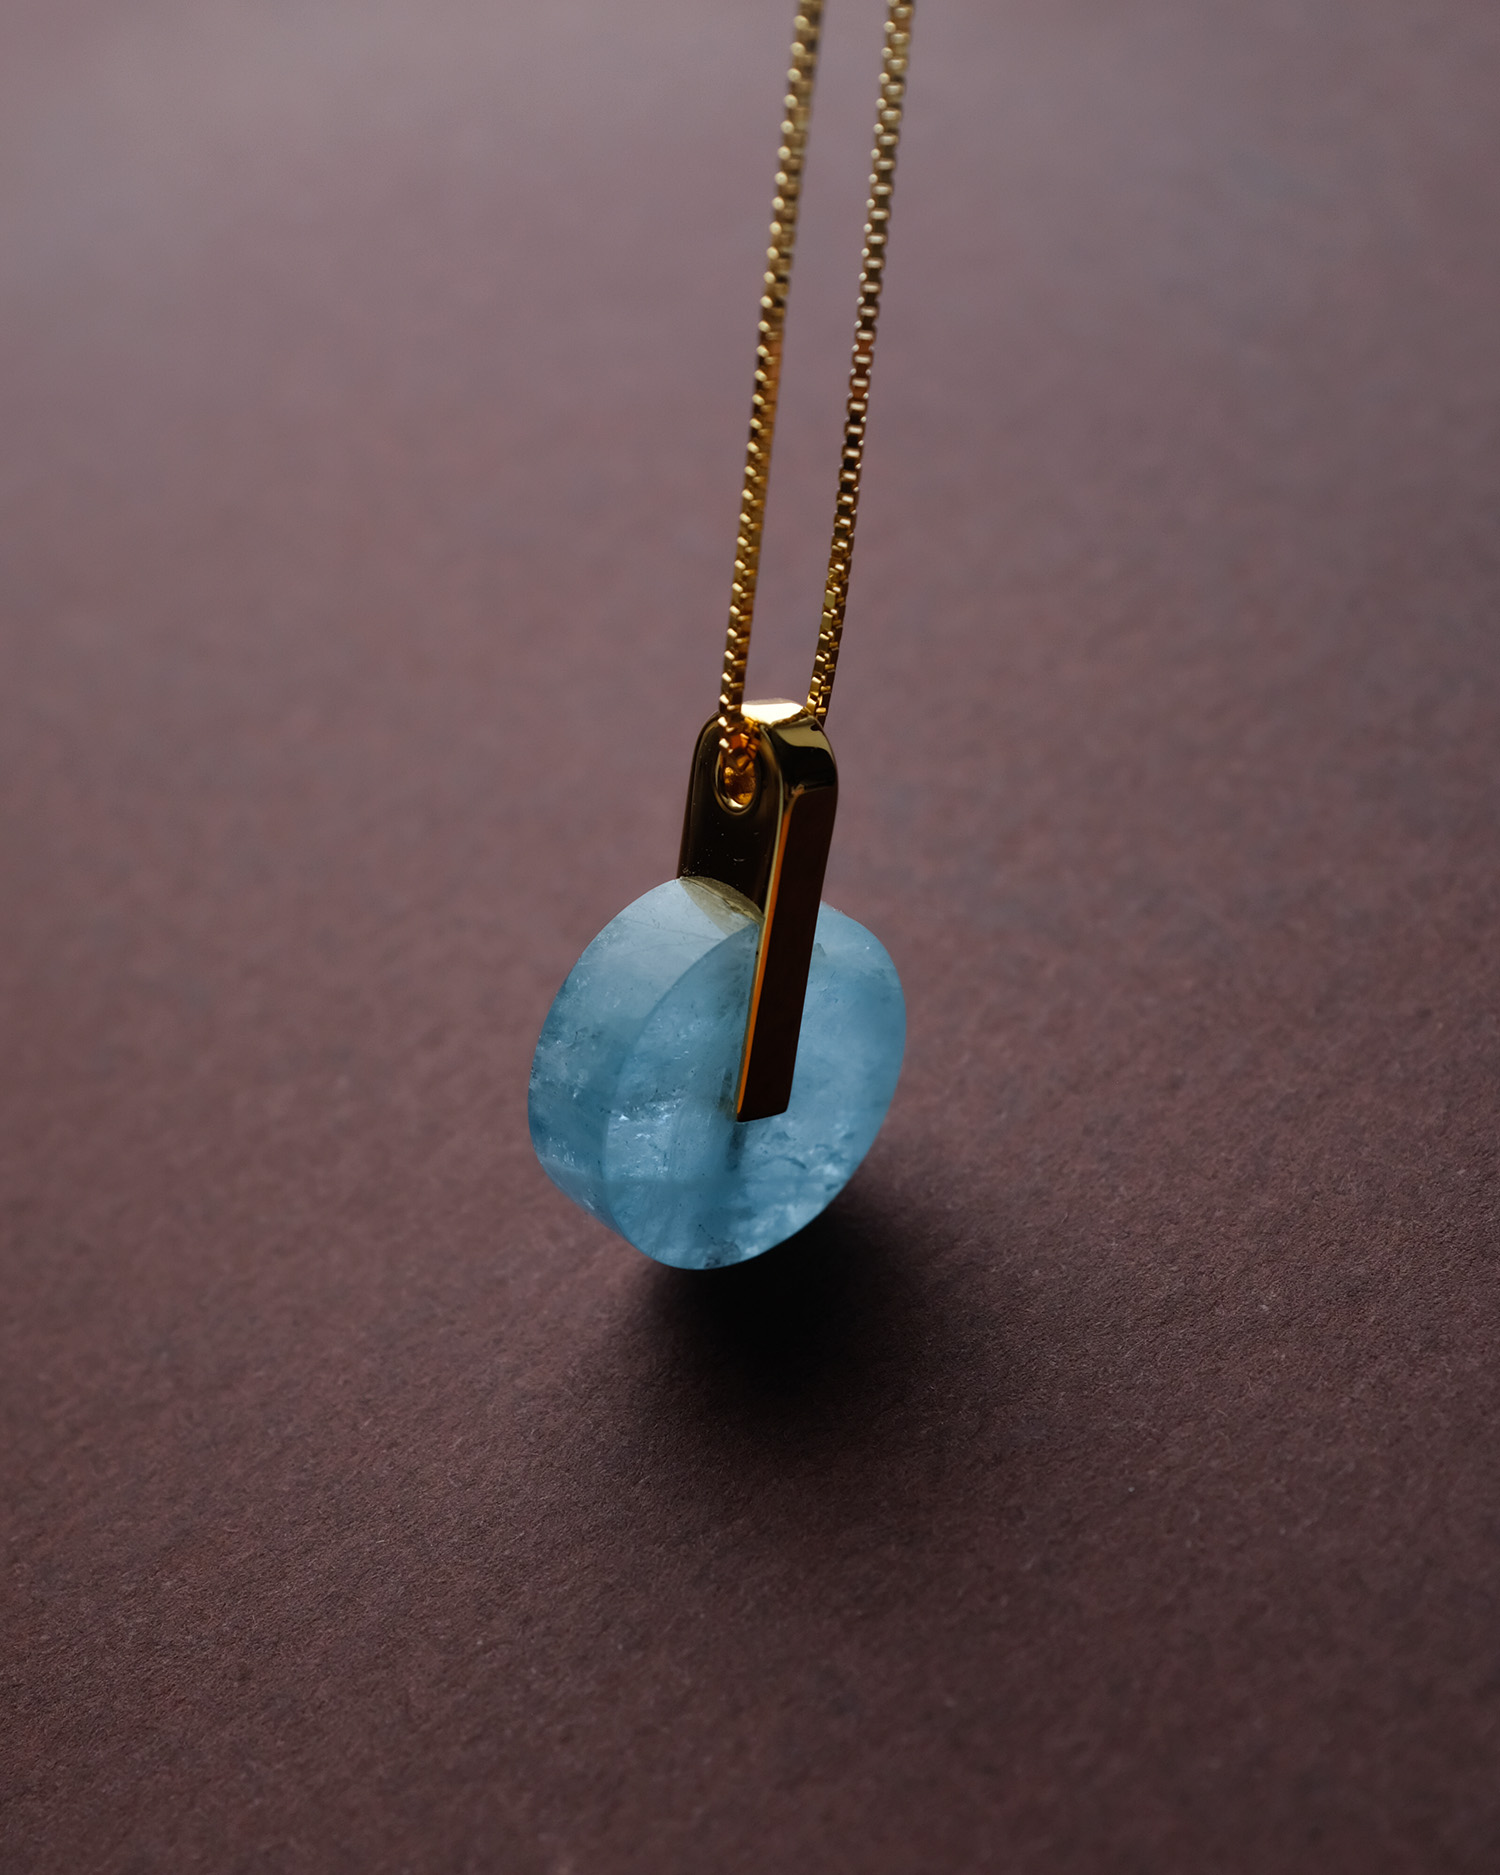 metaformi_design_jewelry_adamantine_necklace_aquamarine_style_4